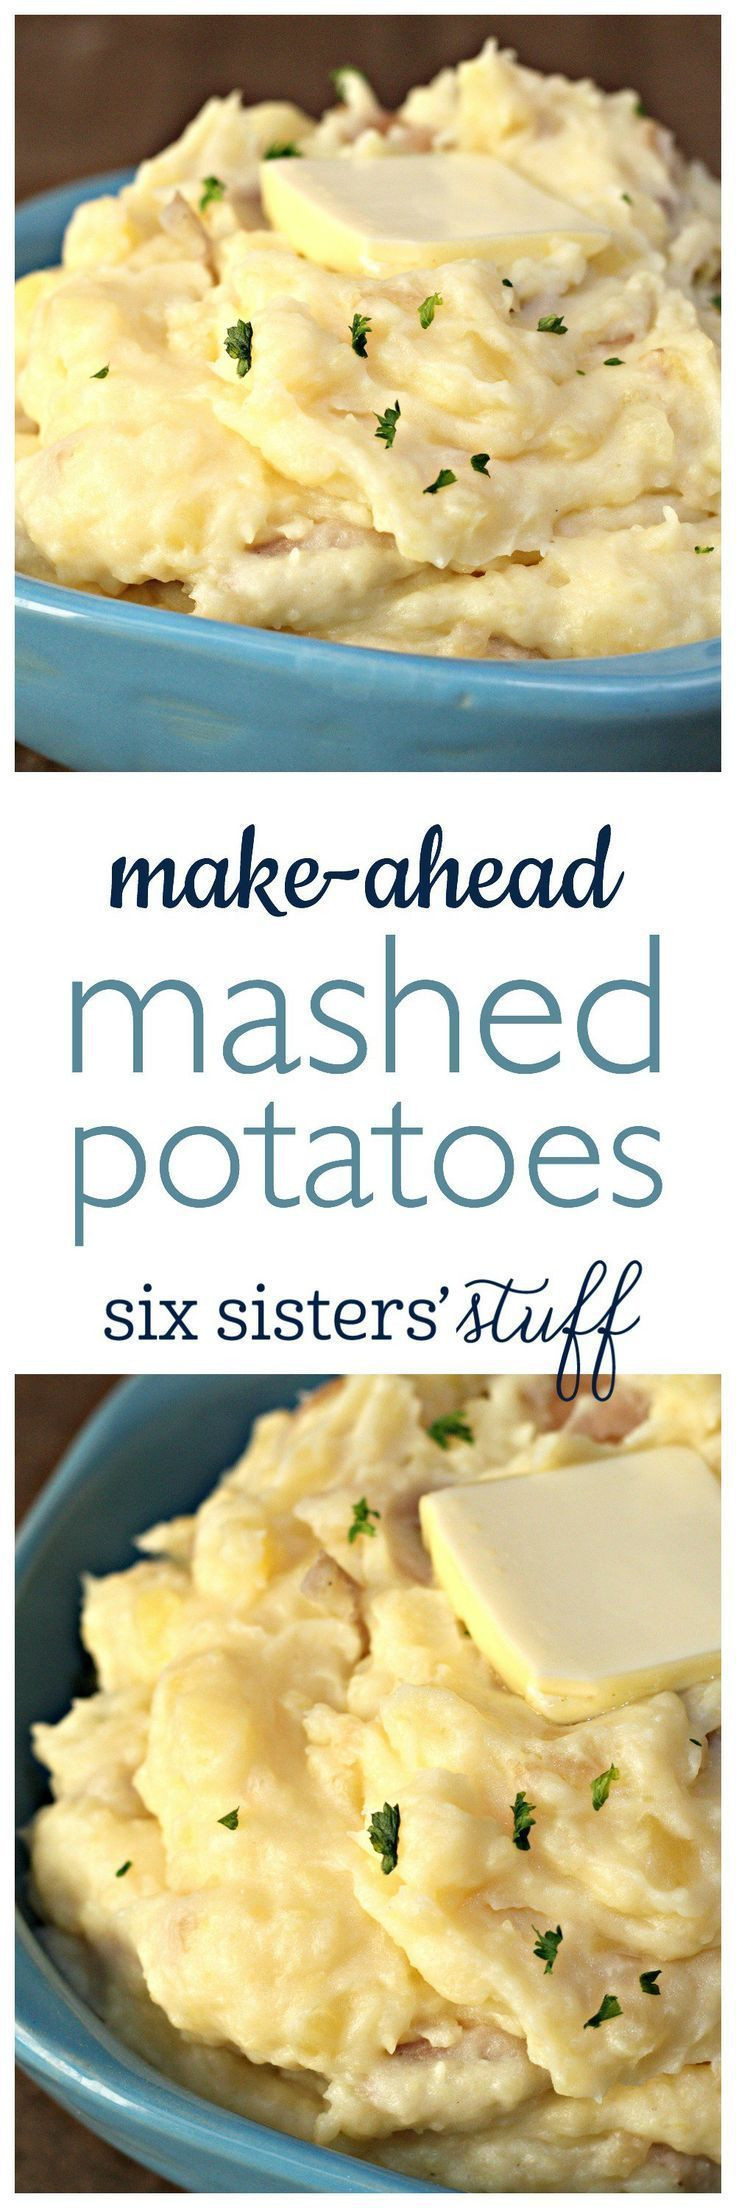 Potato Recipes For Easter Dinner
 Best 25 Make ahead appetizers ideas on Pinterest